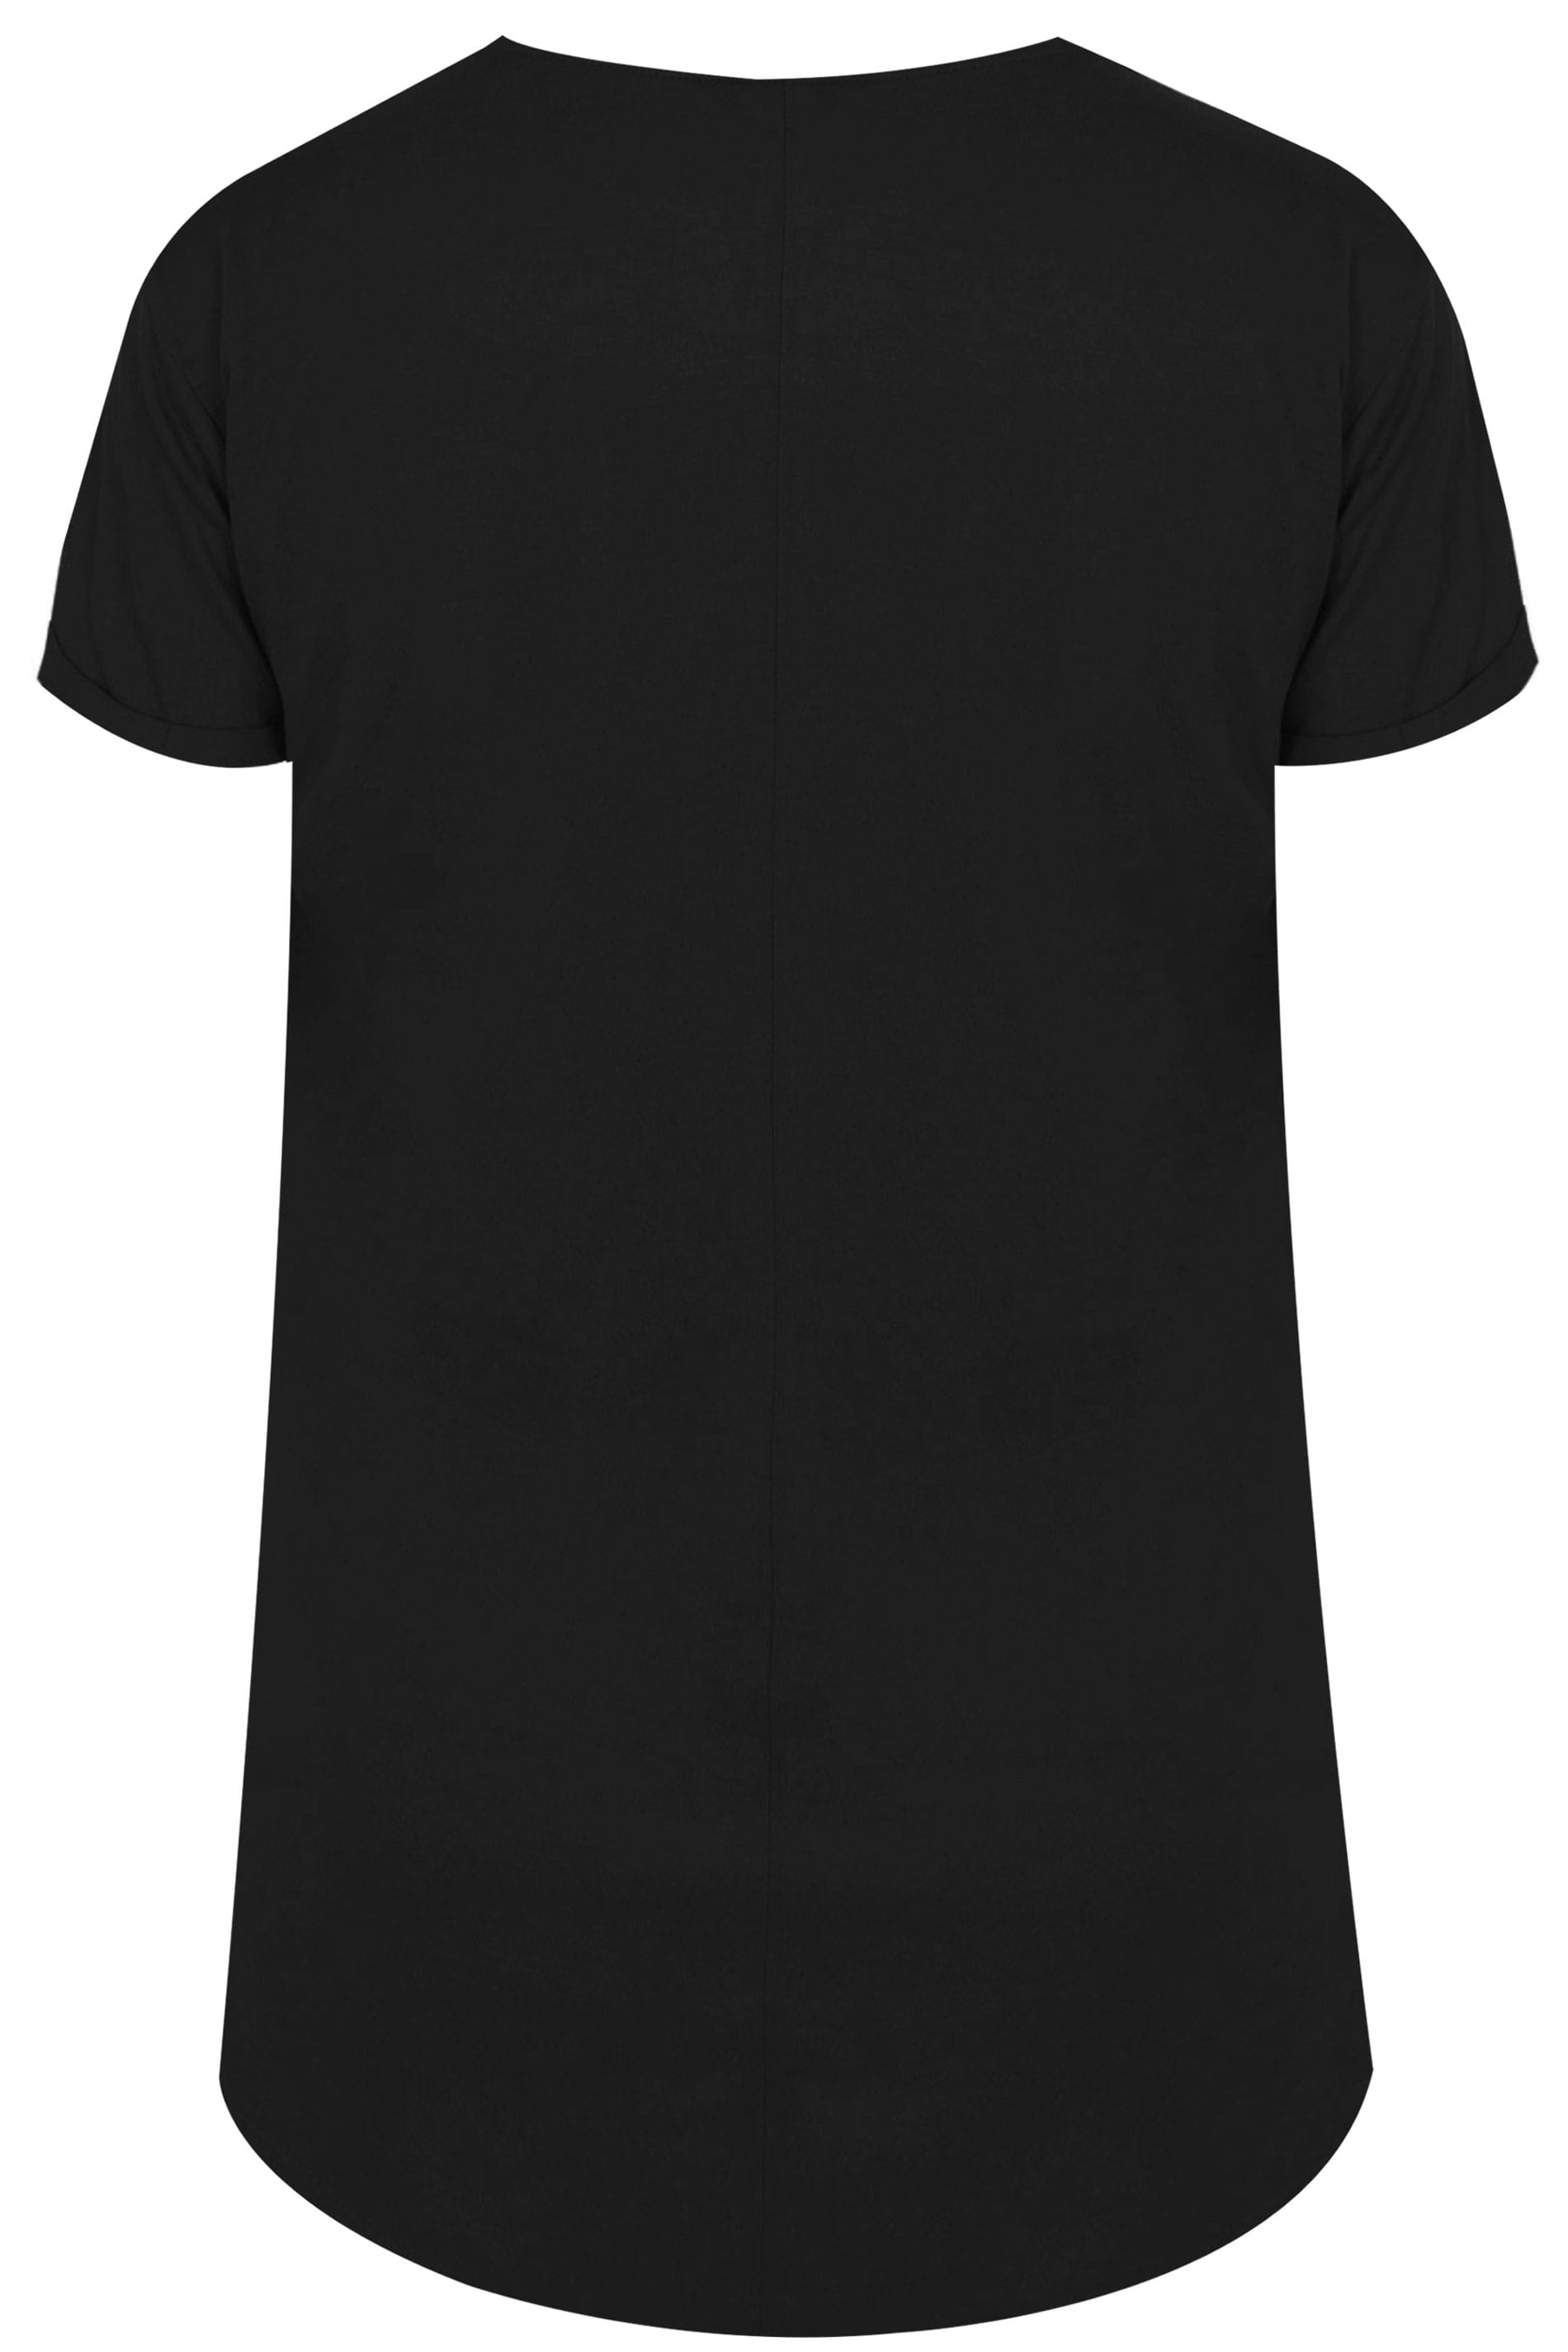 Black Mock Pocket T-Shirt , Plus size 16 to 36